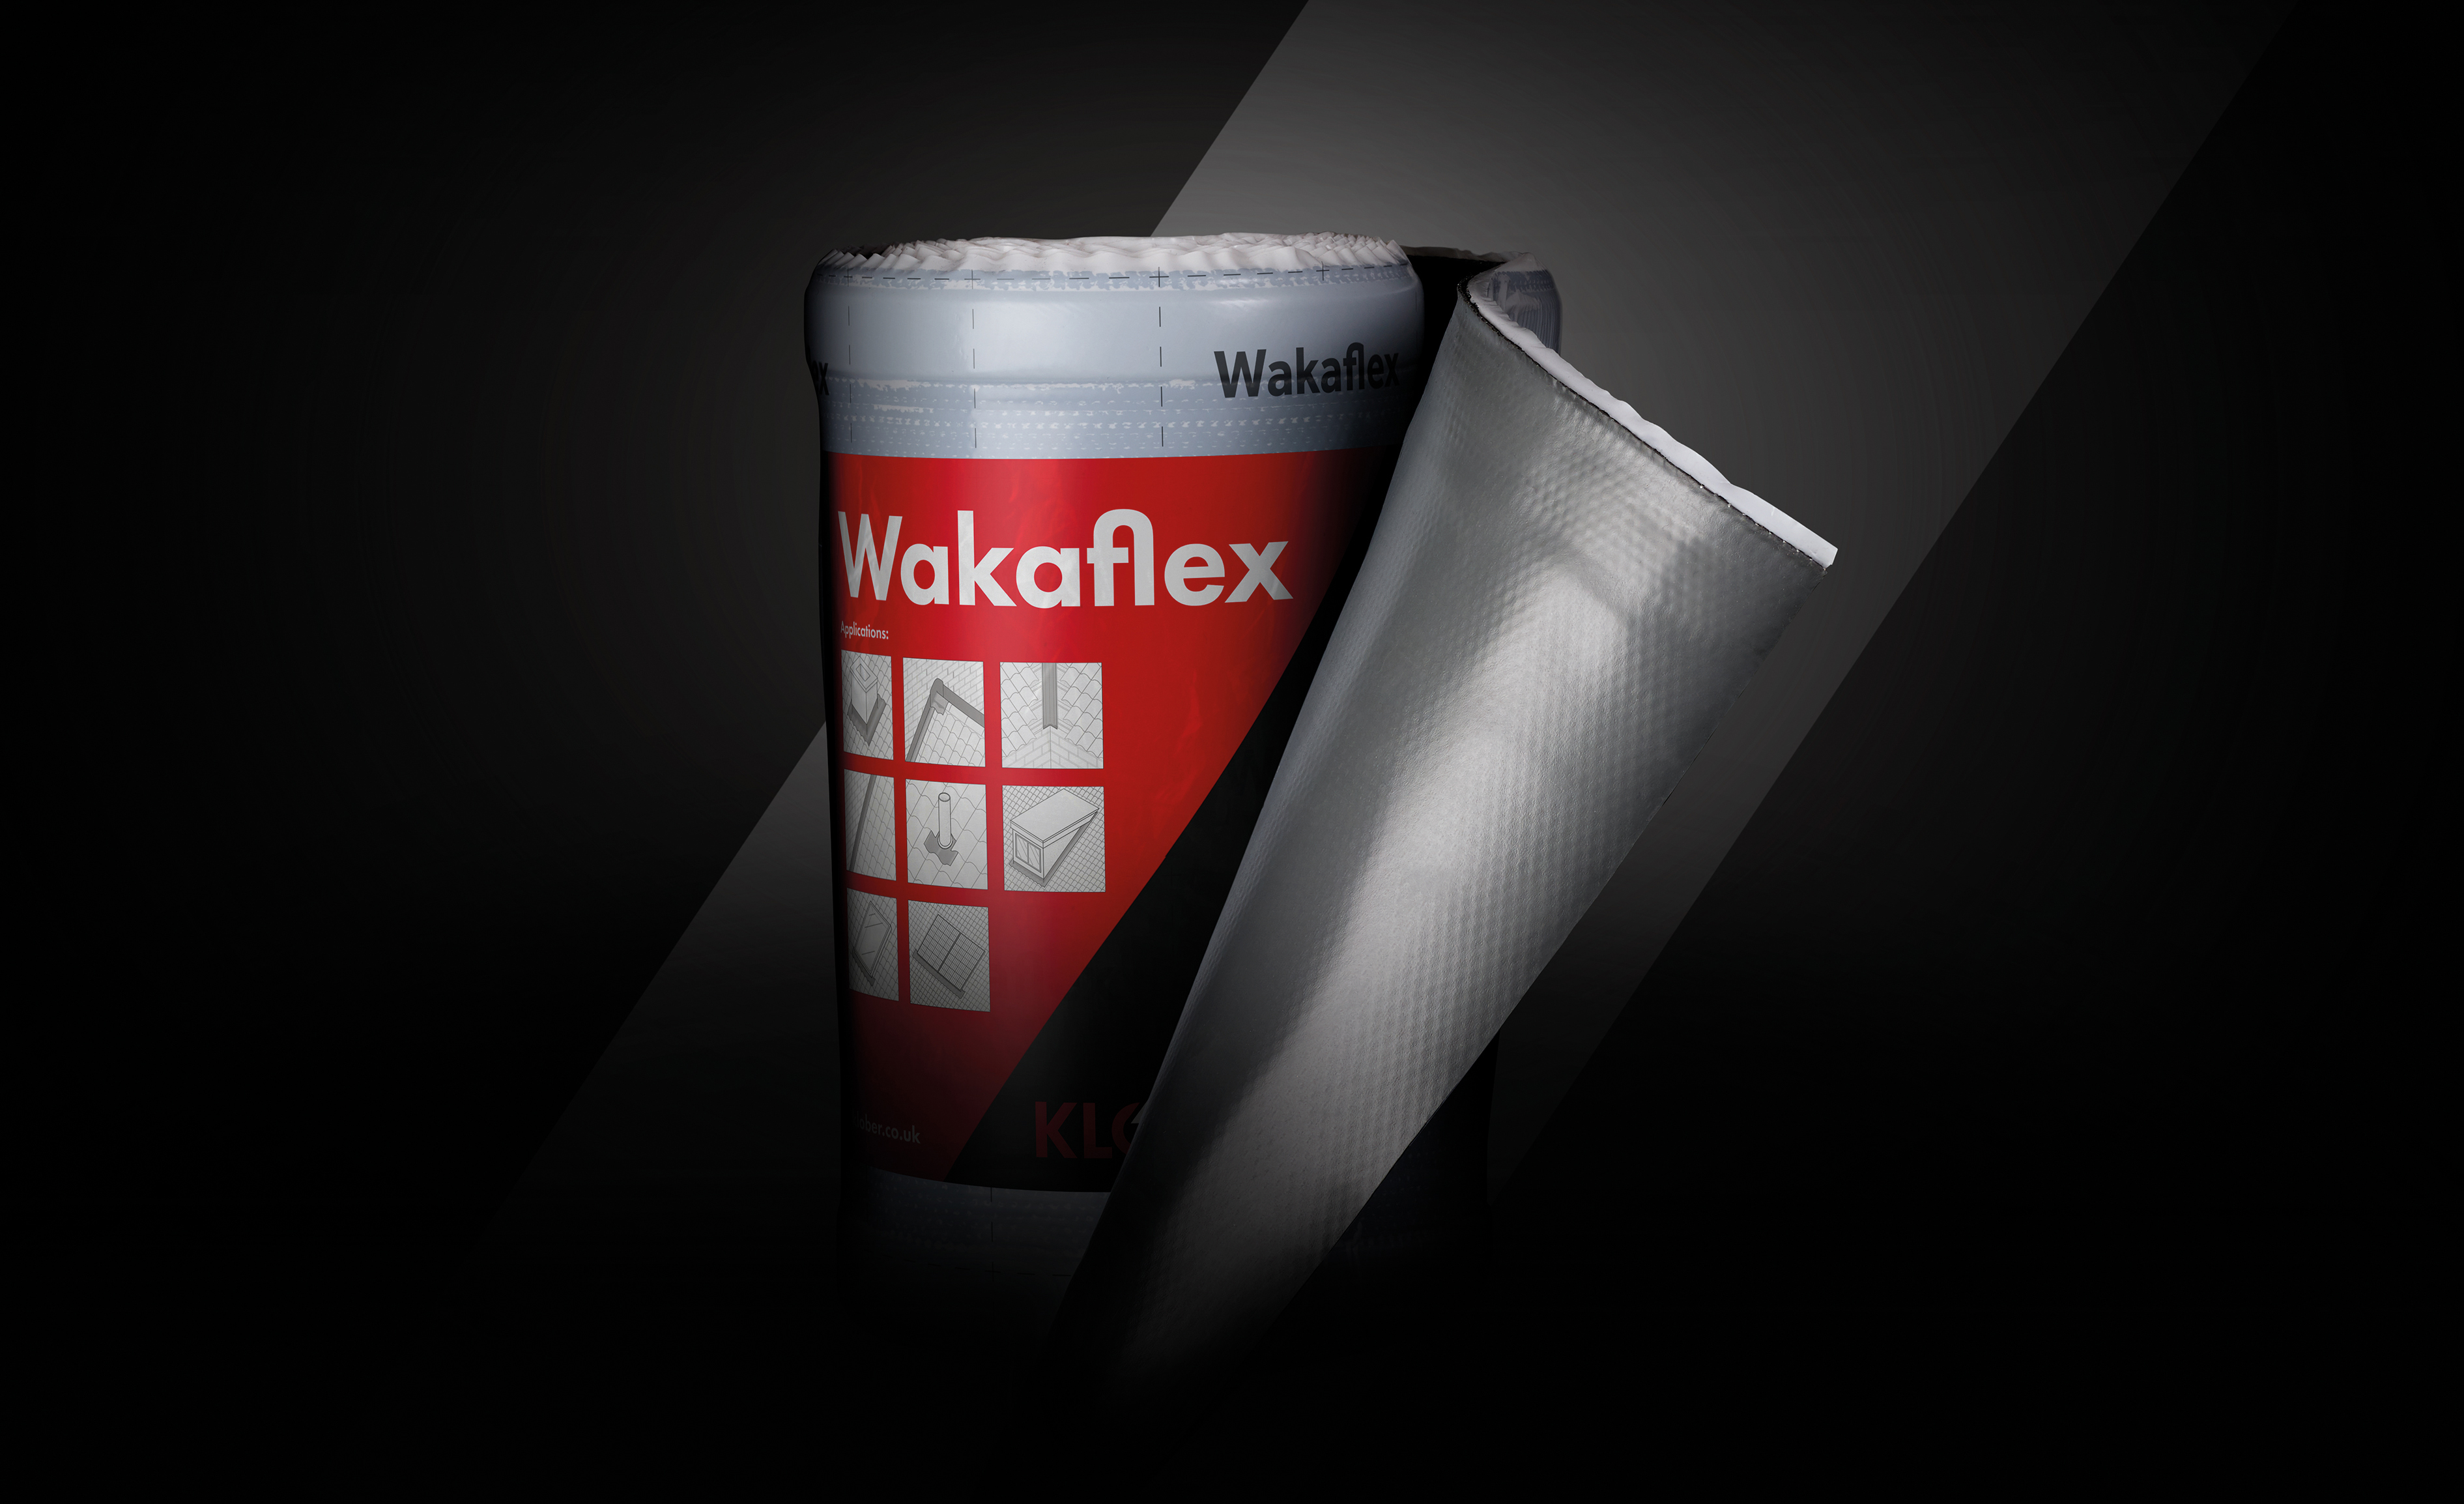 Wakaflex - The smart alternative to metal & lead